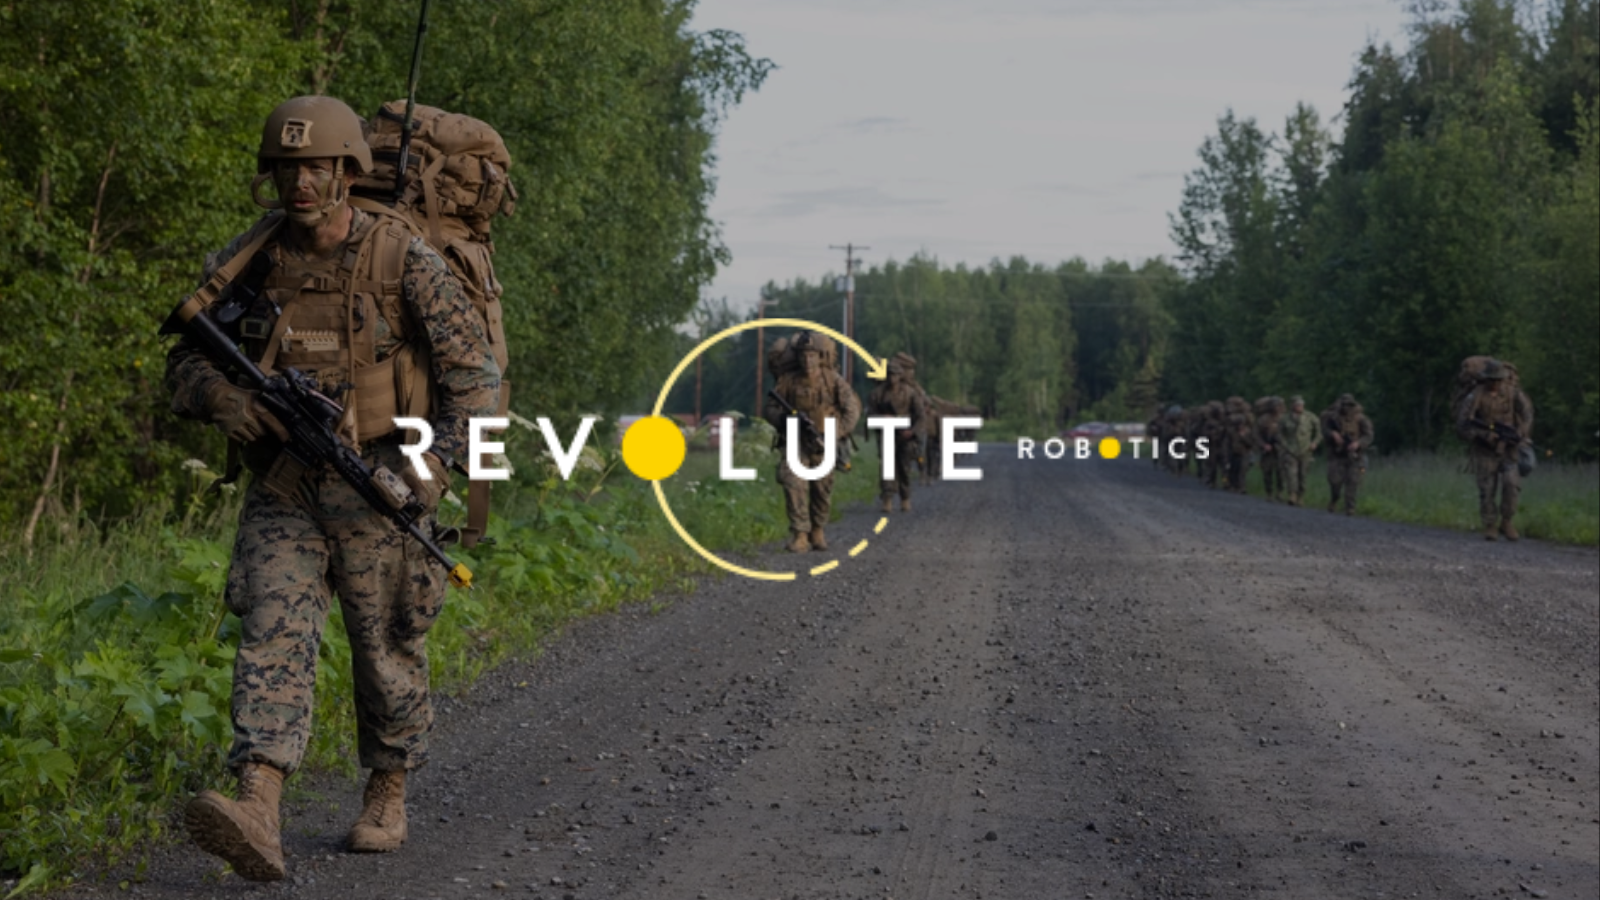 Revolute Robotics